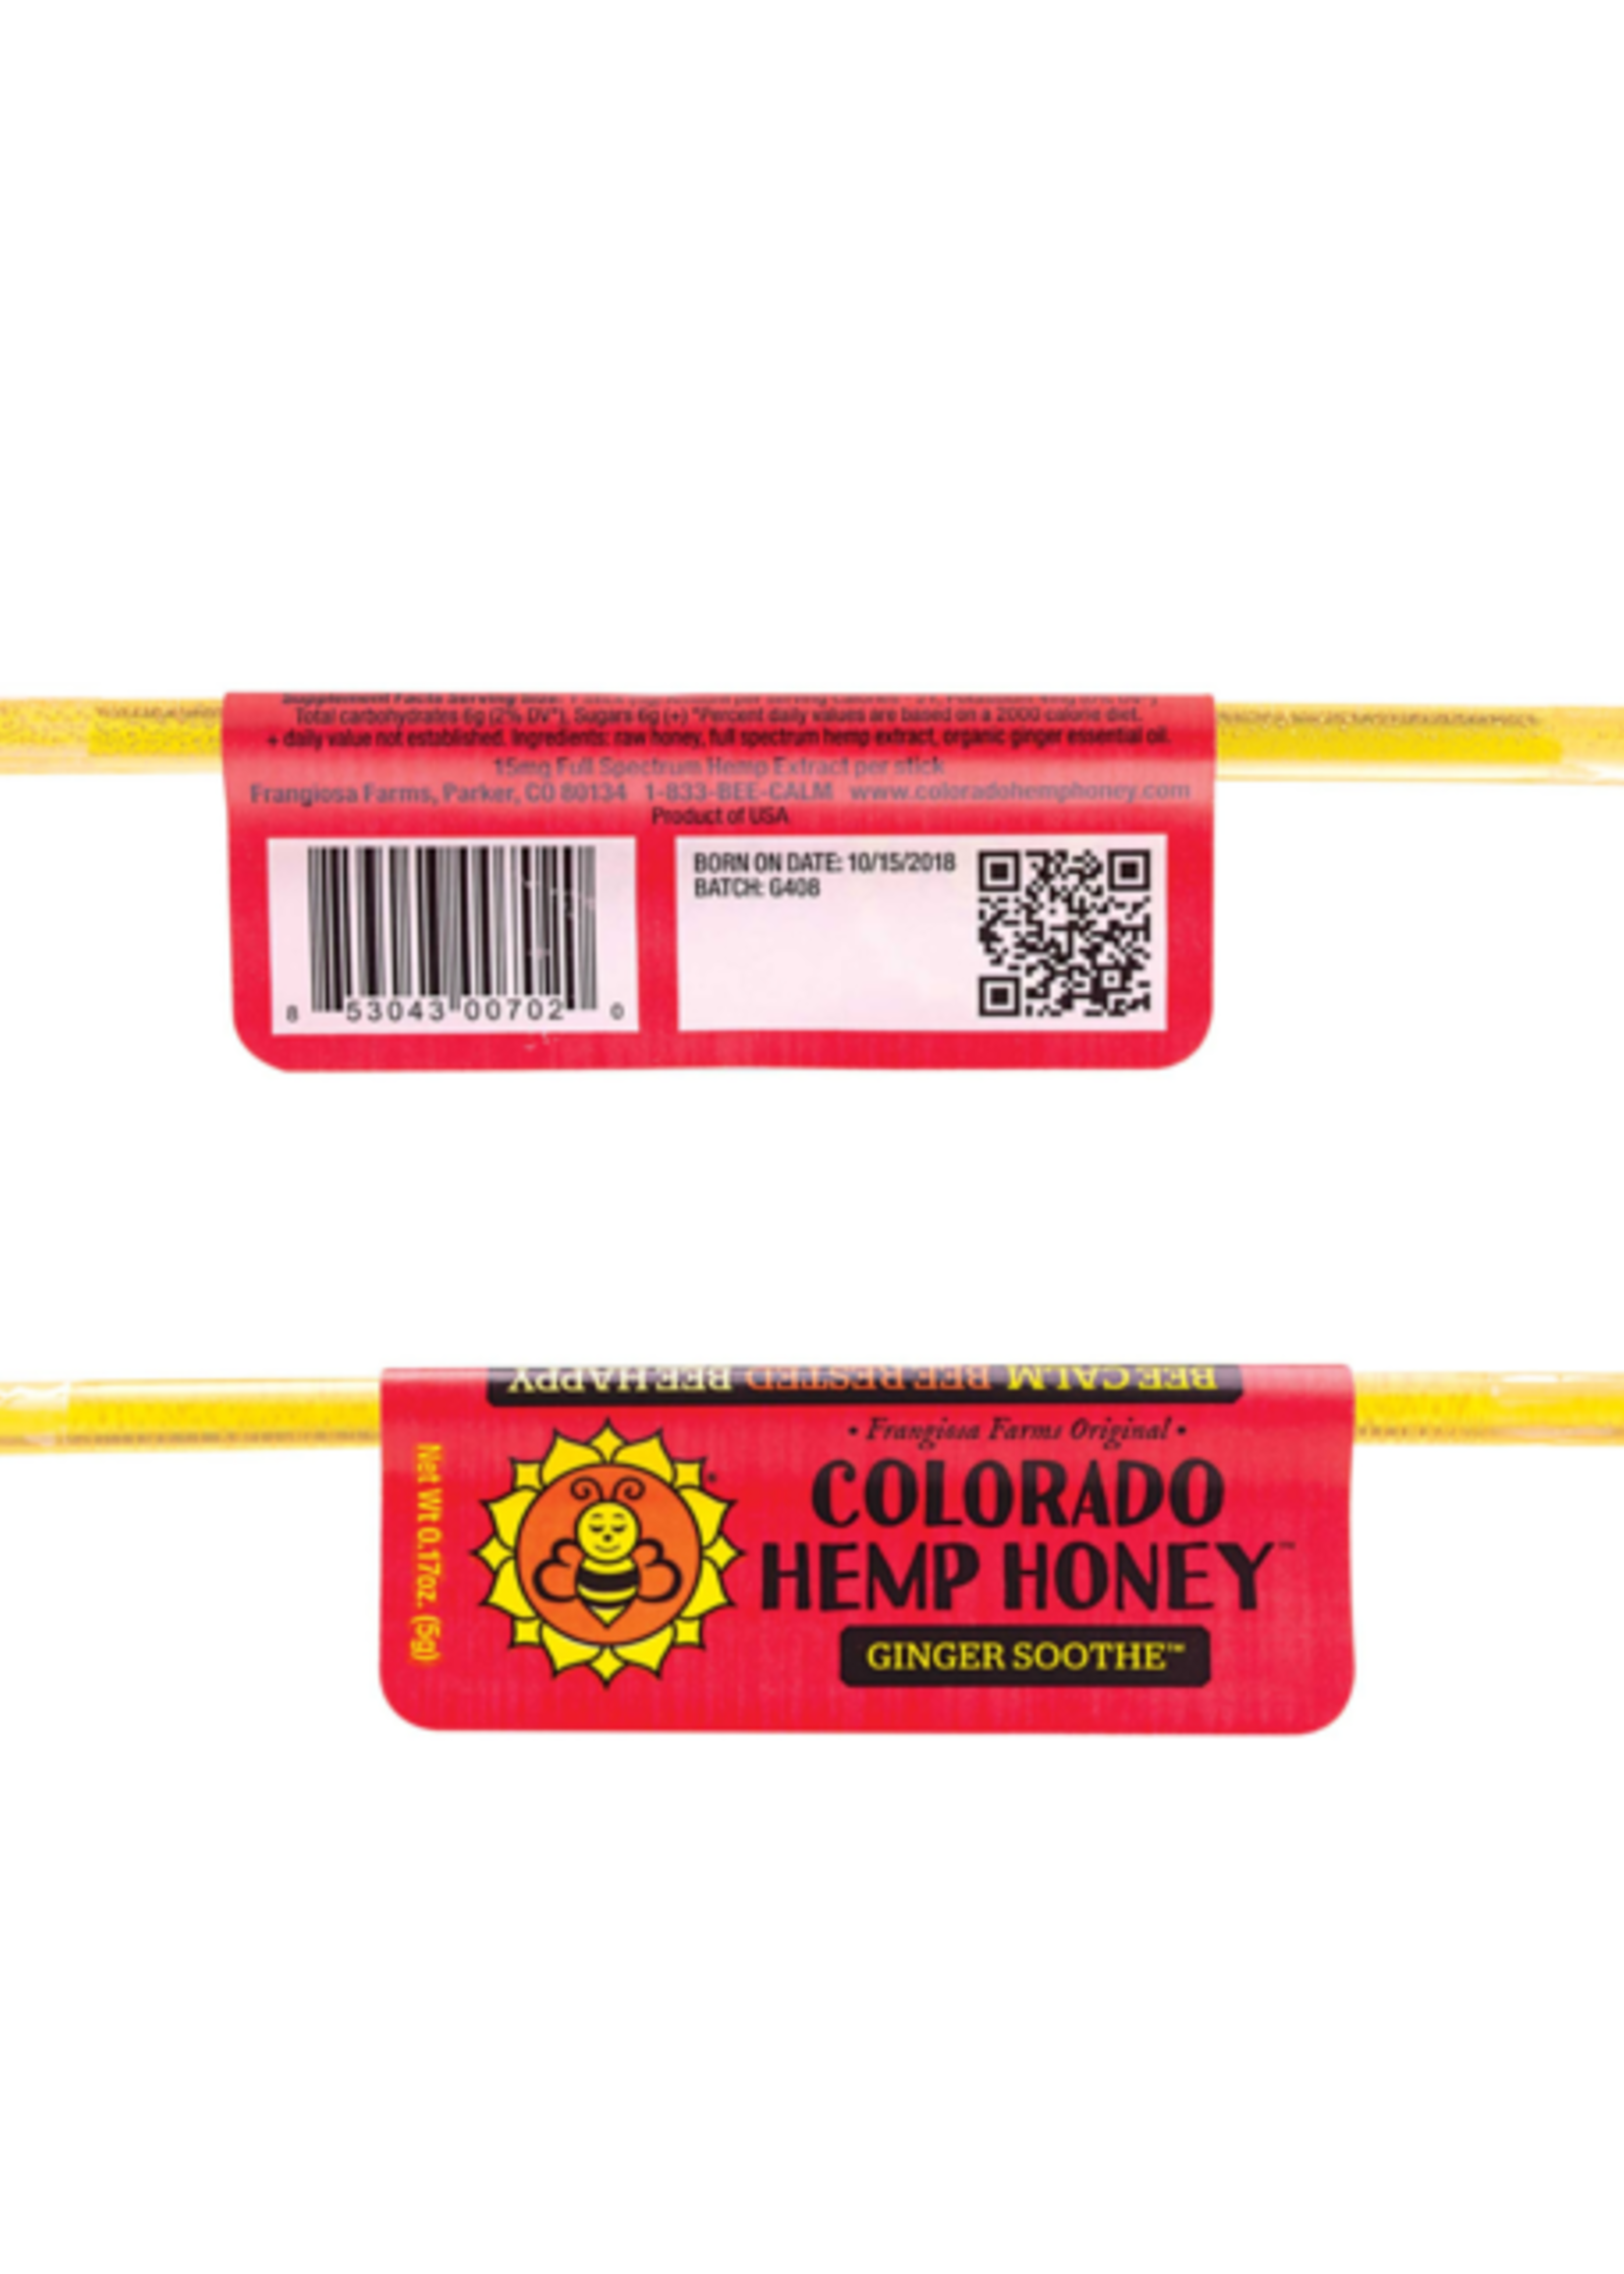 Colorado Hemp Honey Colorado Hemp Honey Ginger Soothe Sticks Full Spectrum Hemp Supplement